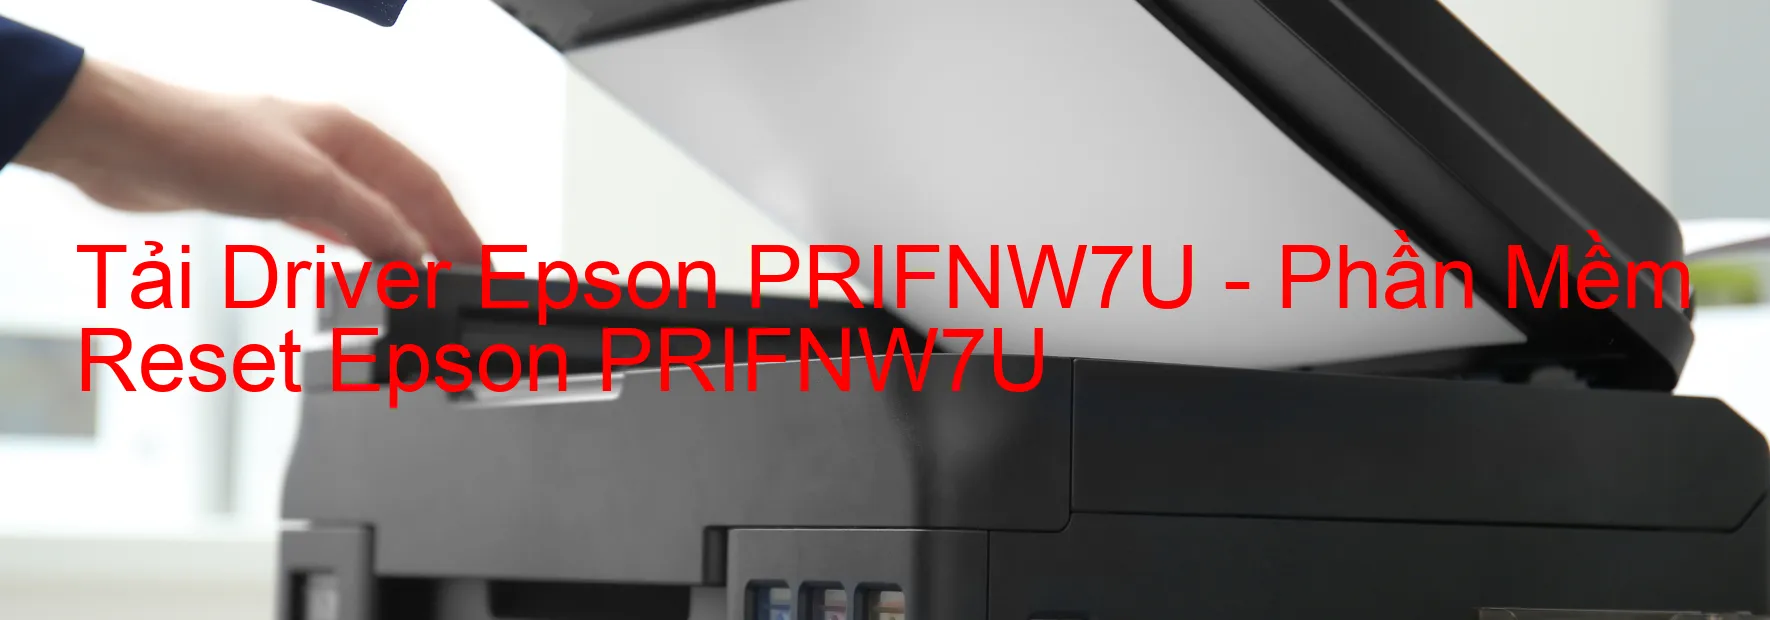 Driver Epson PRIFNW7U, Phần Mềm Reset Epson PRIFNW7U